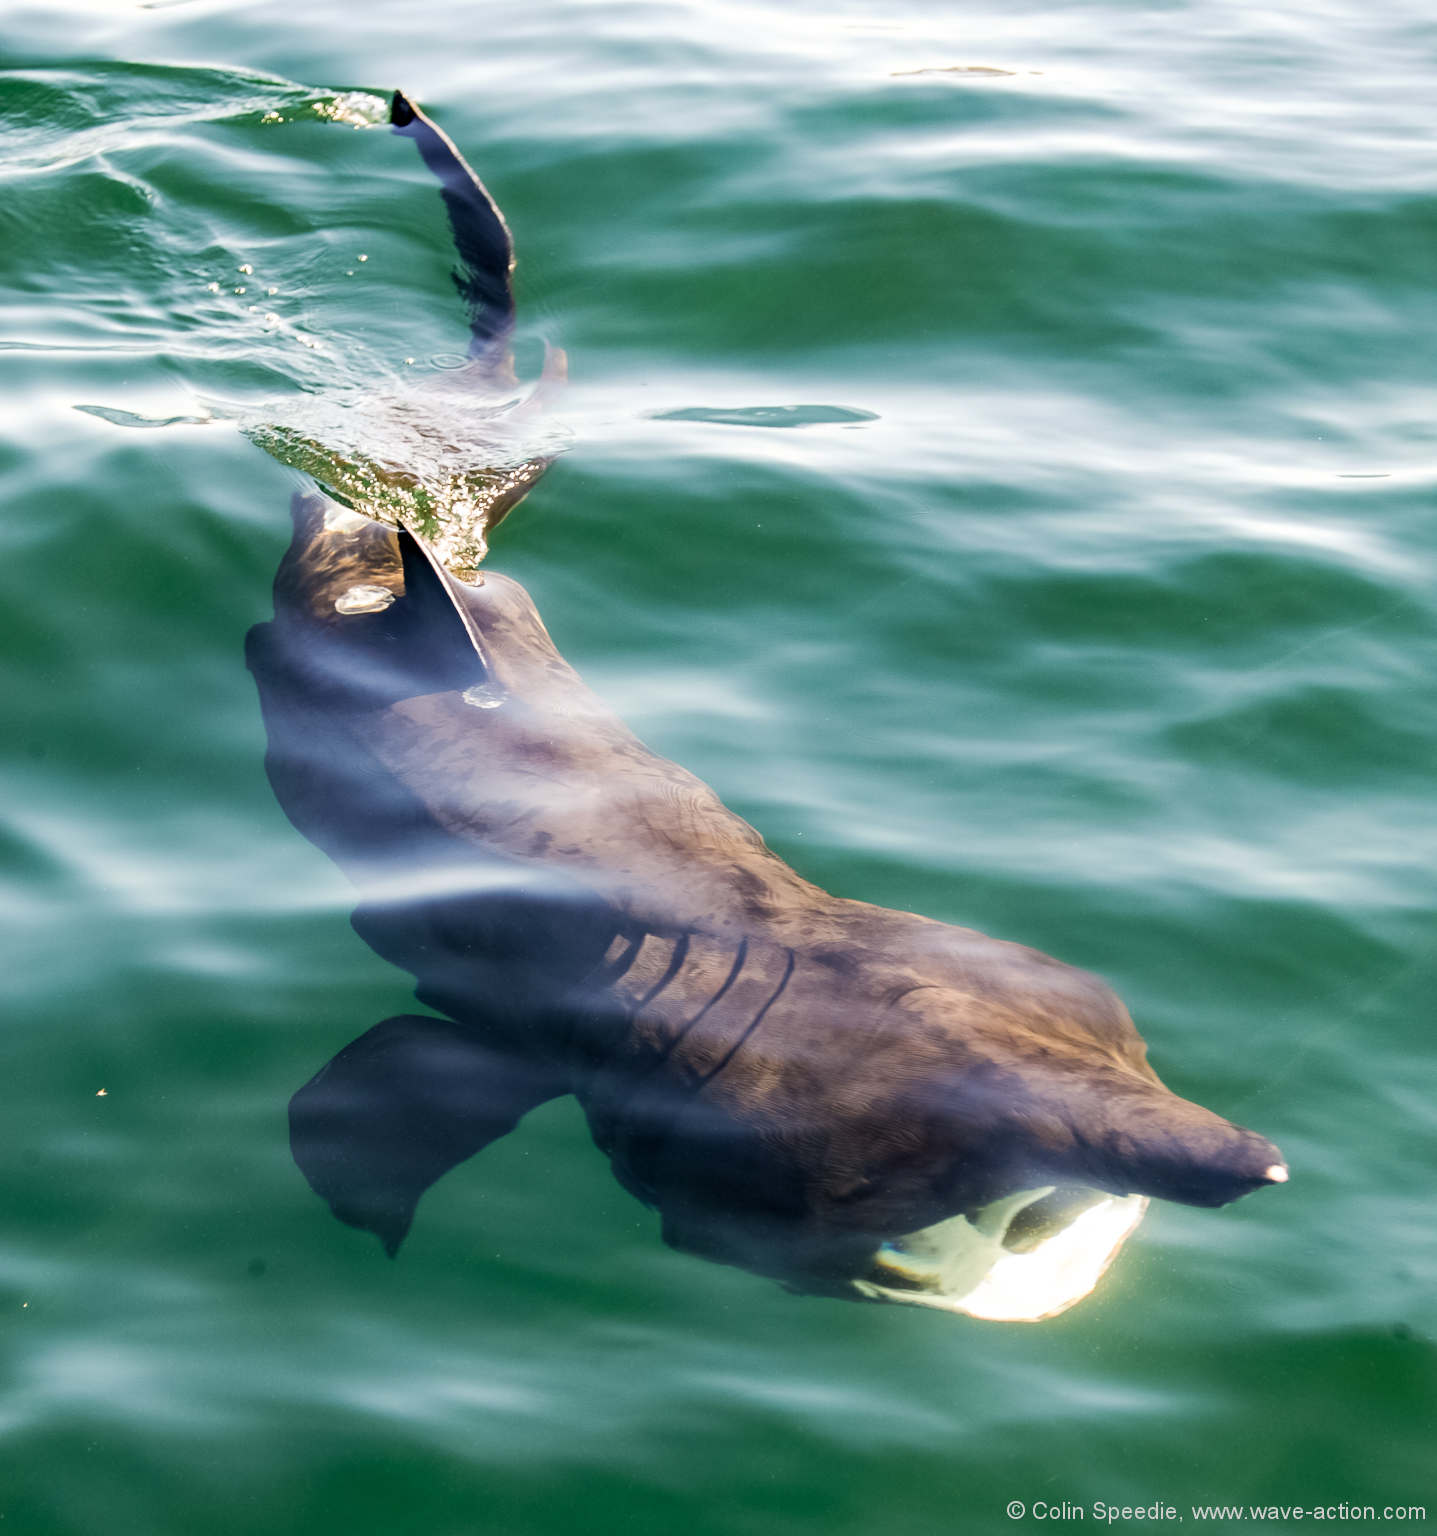 Finding, And Saving, The Basking Shark